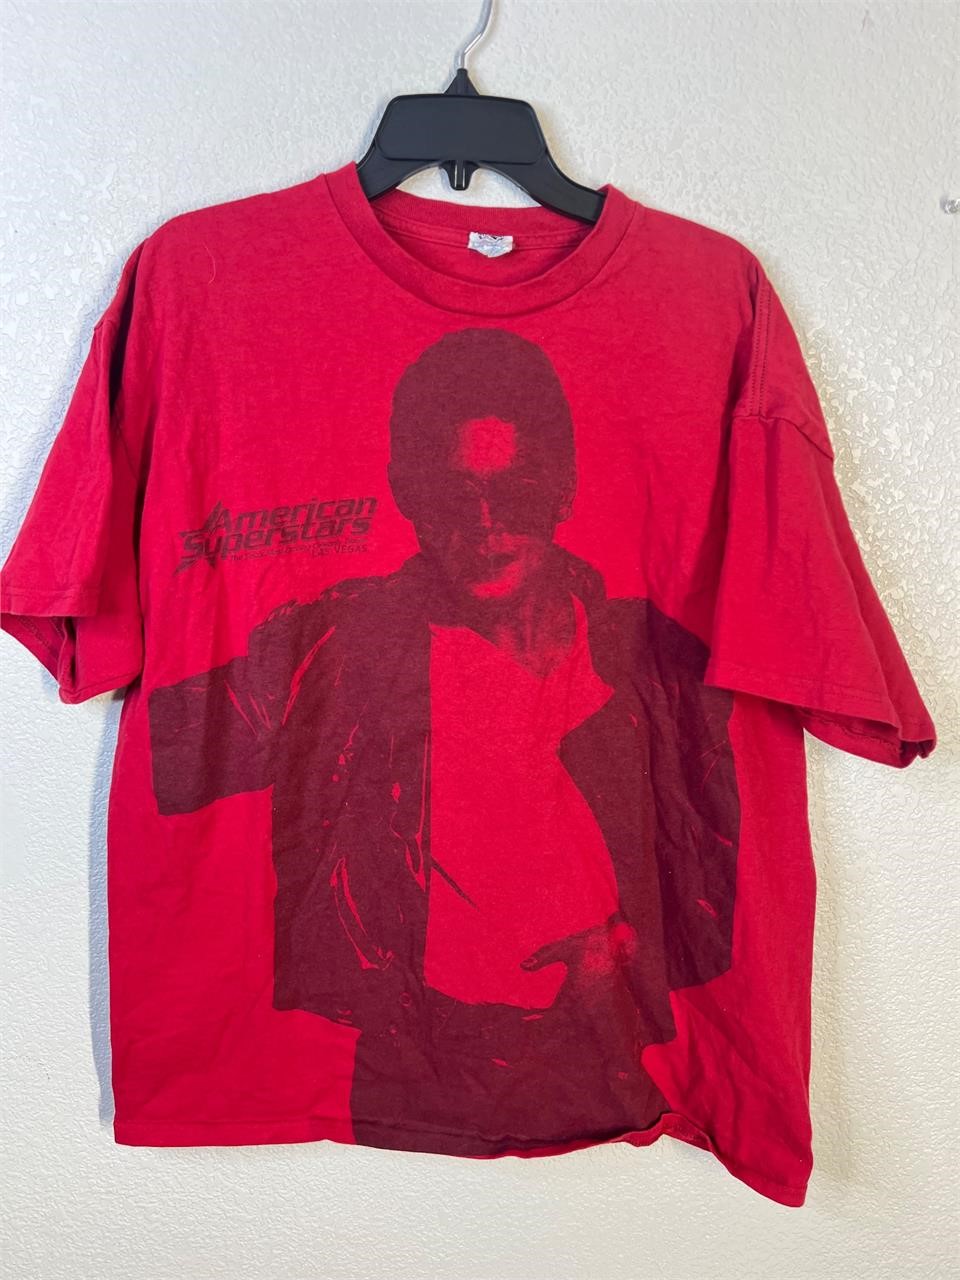 Superstars Michael Jackson Impersonator Shirt